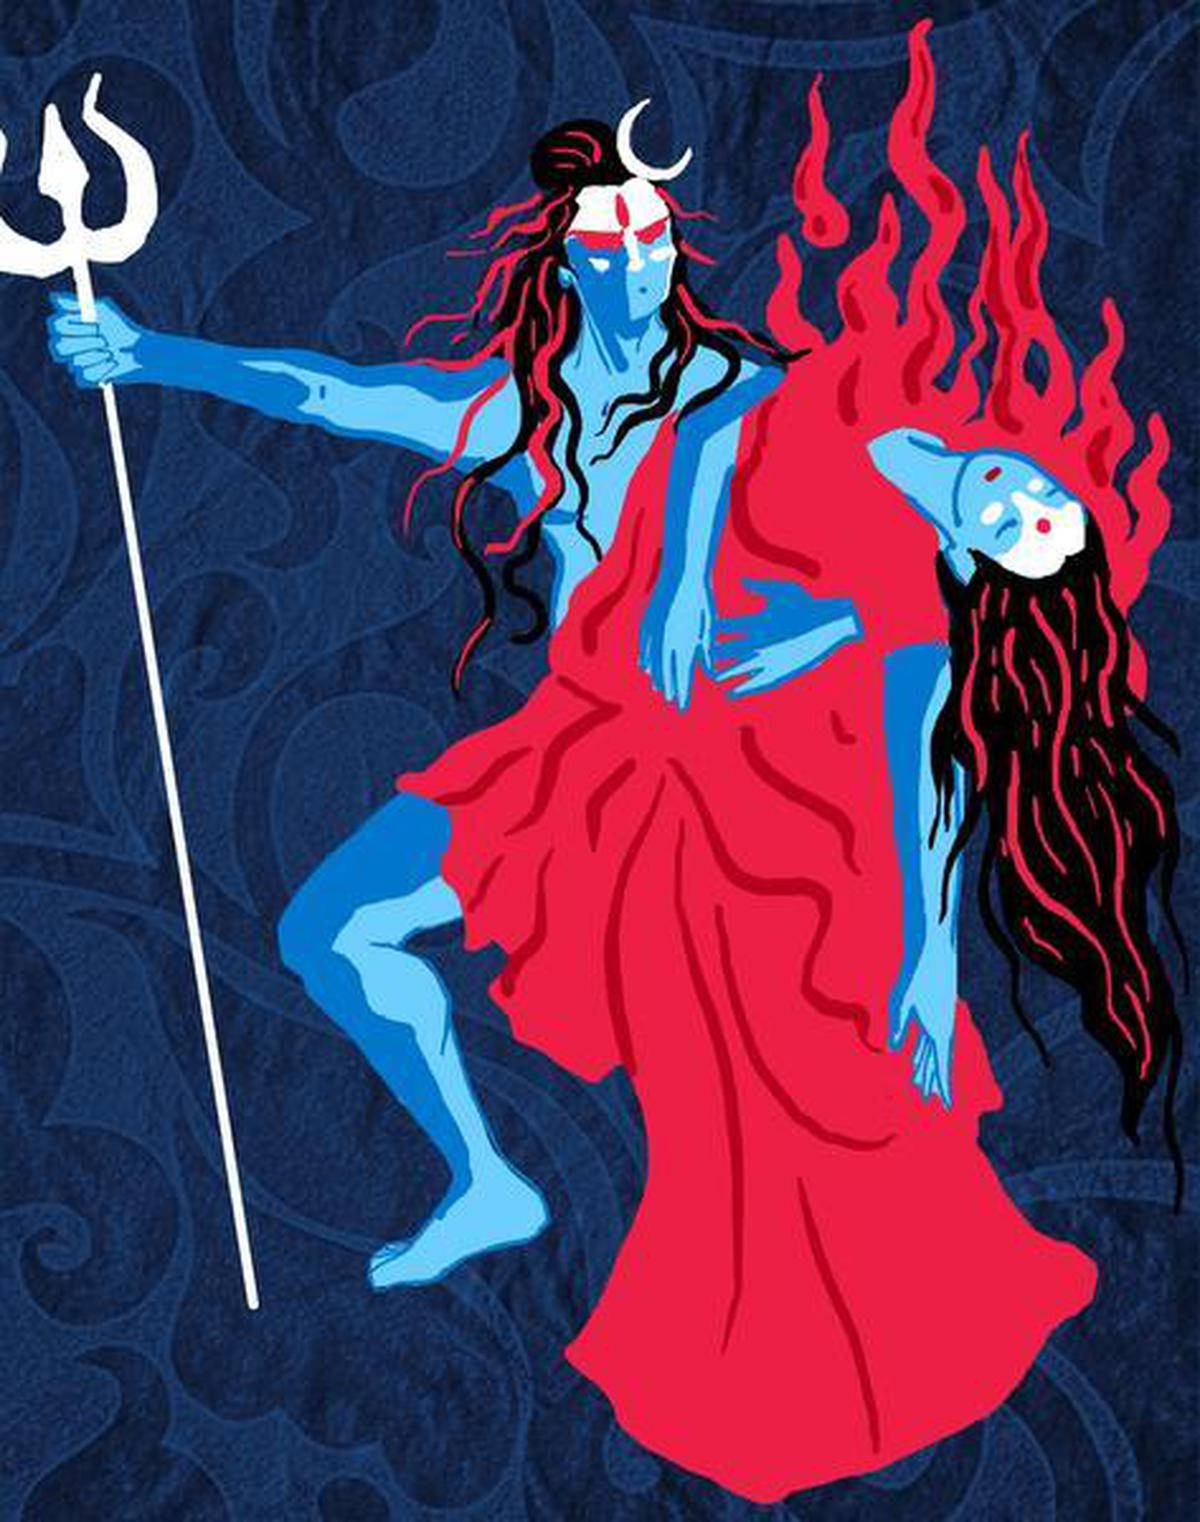 Sati Lord Shiva Vred Bemyndiget Kvinde Wallpaper